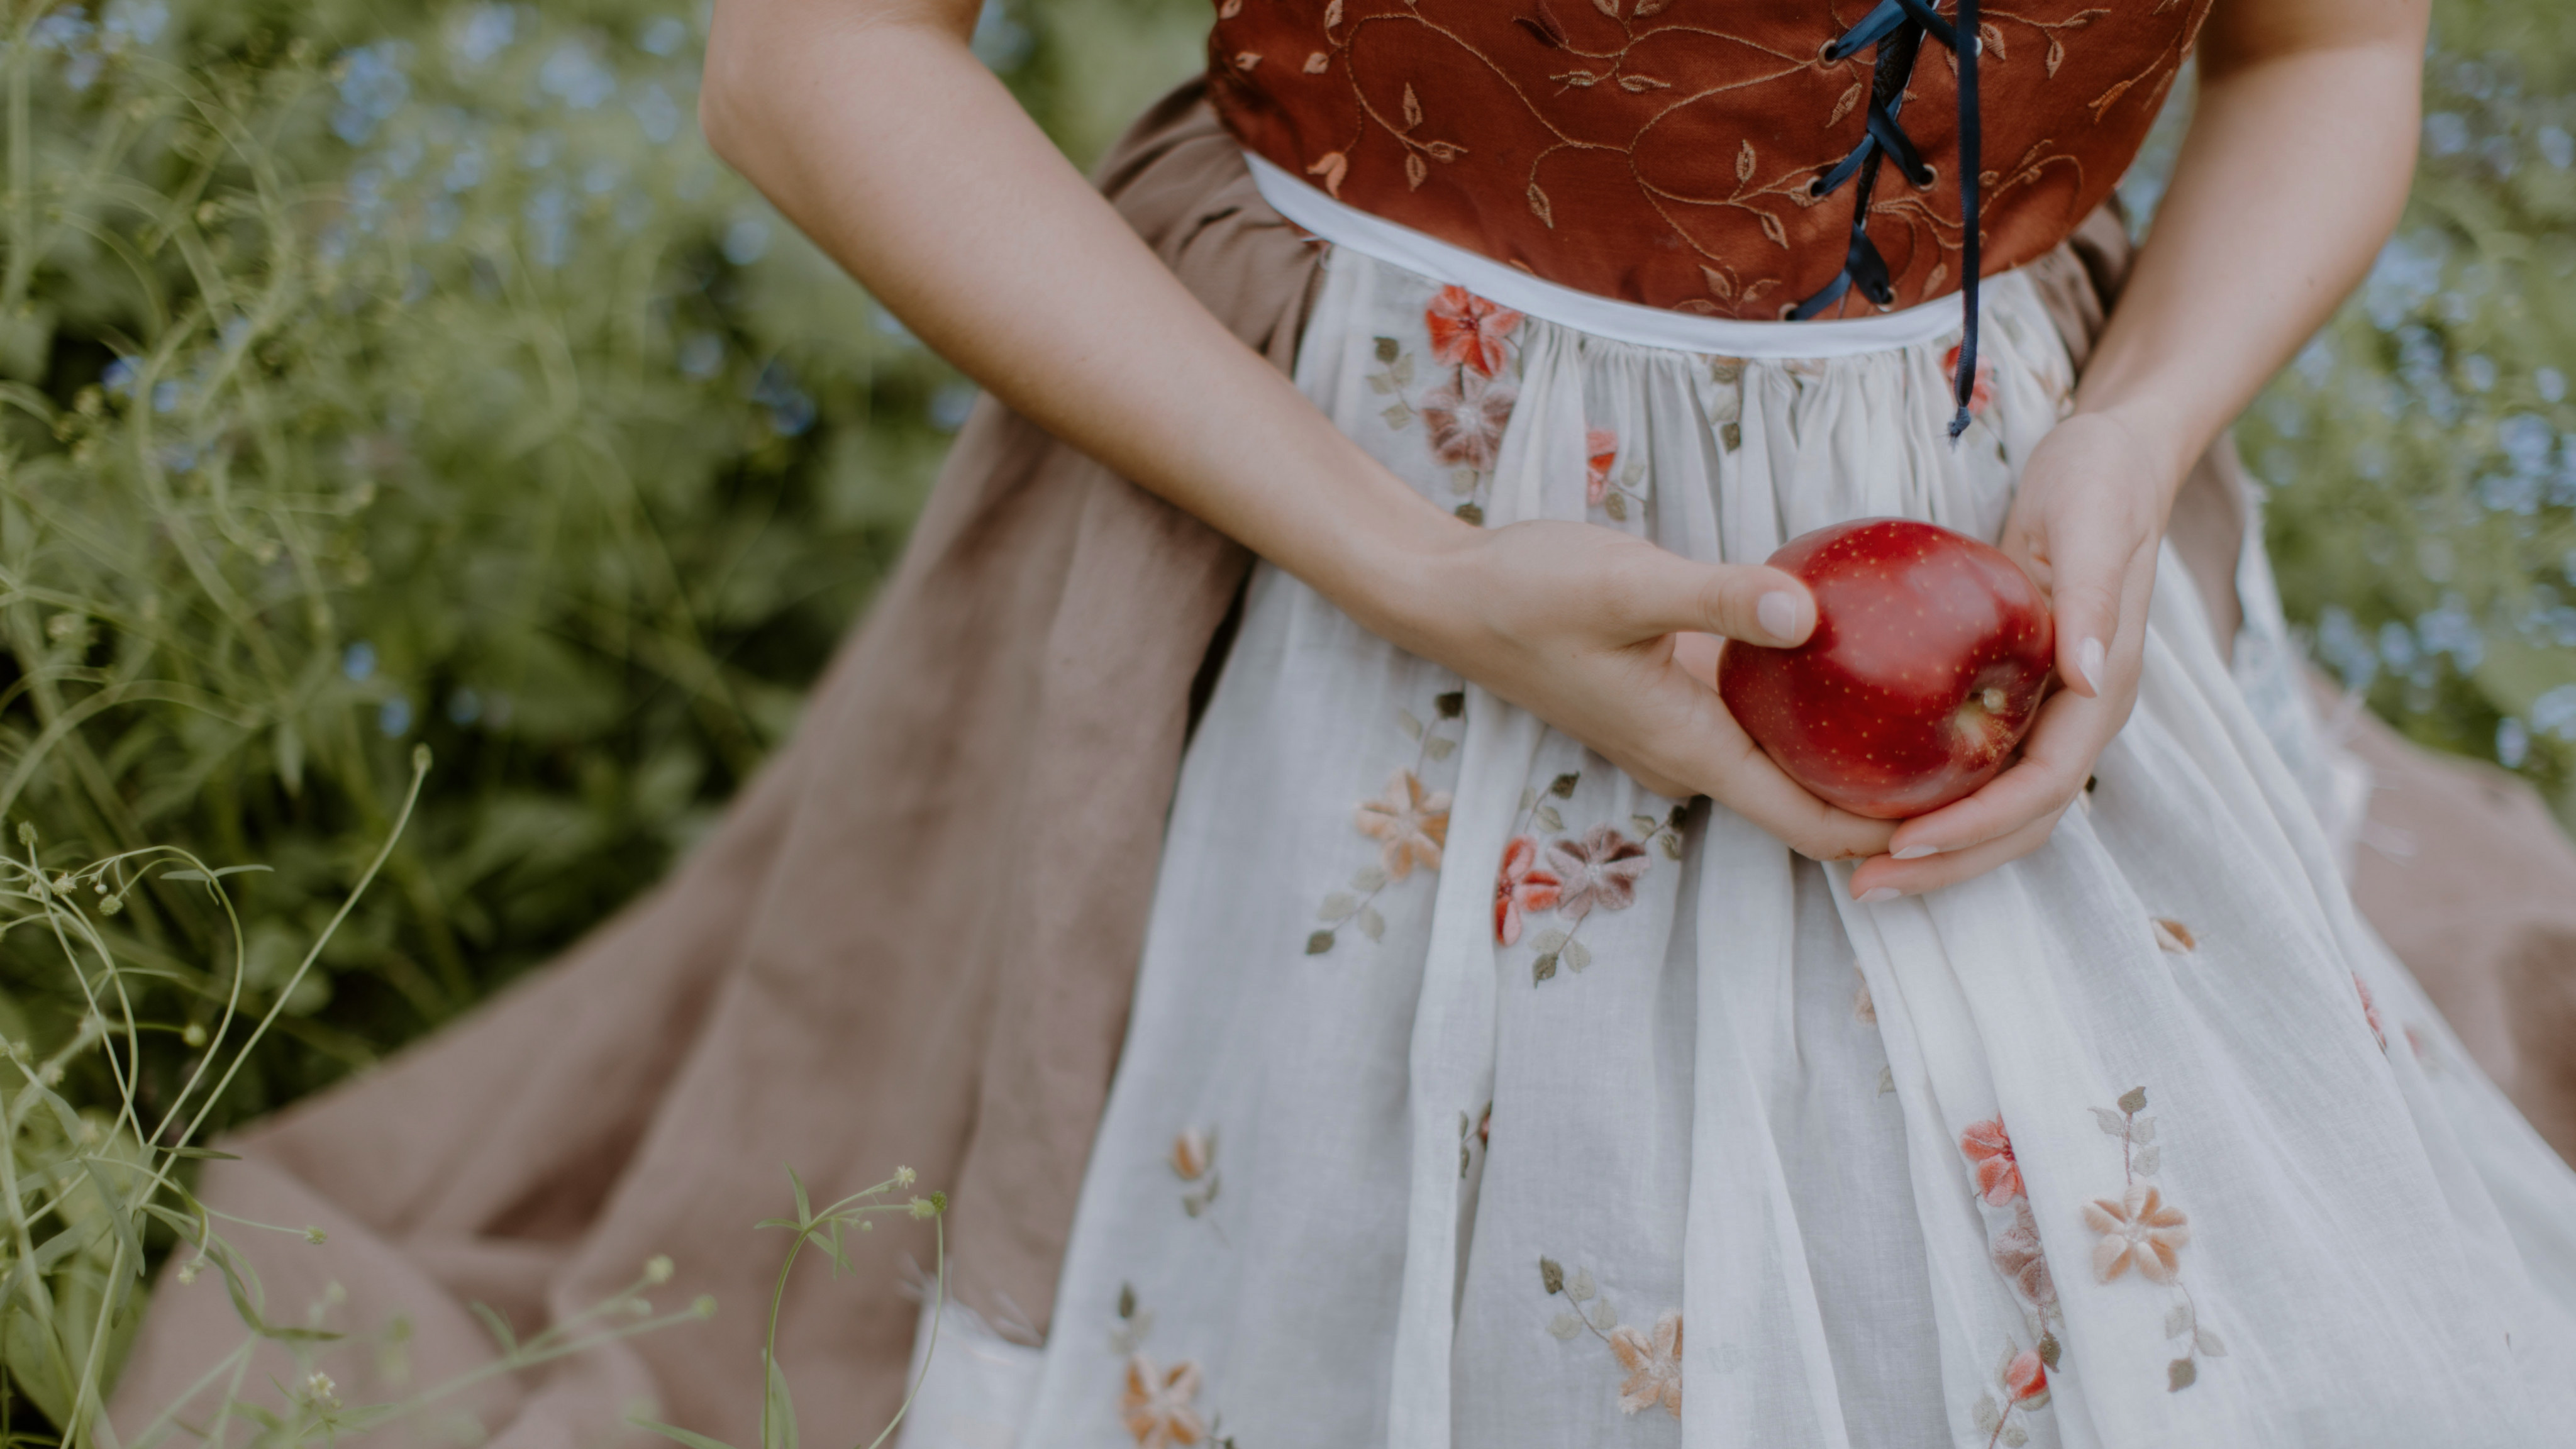 A woman holding an apple